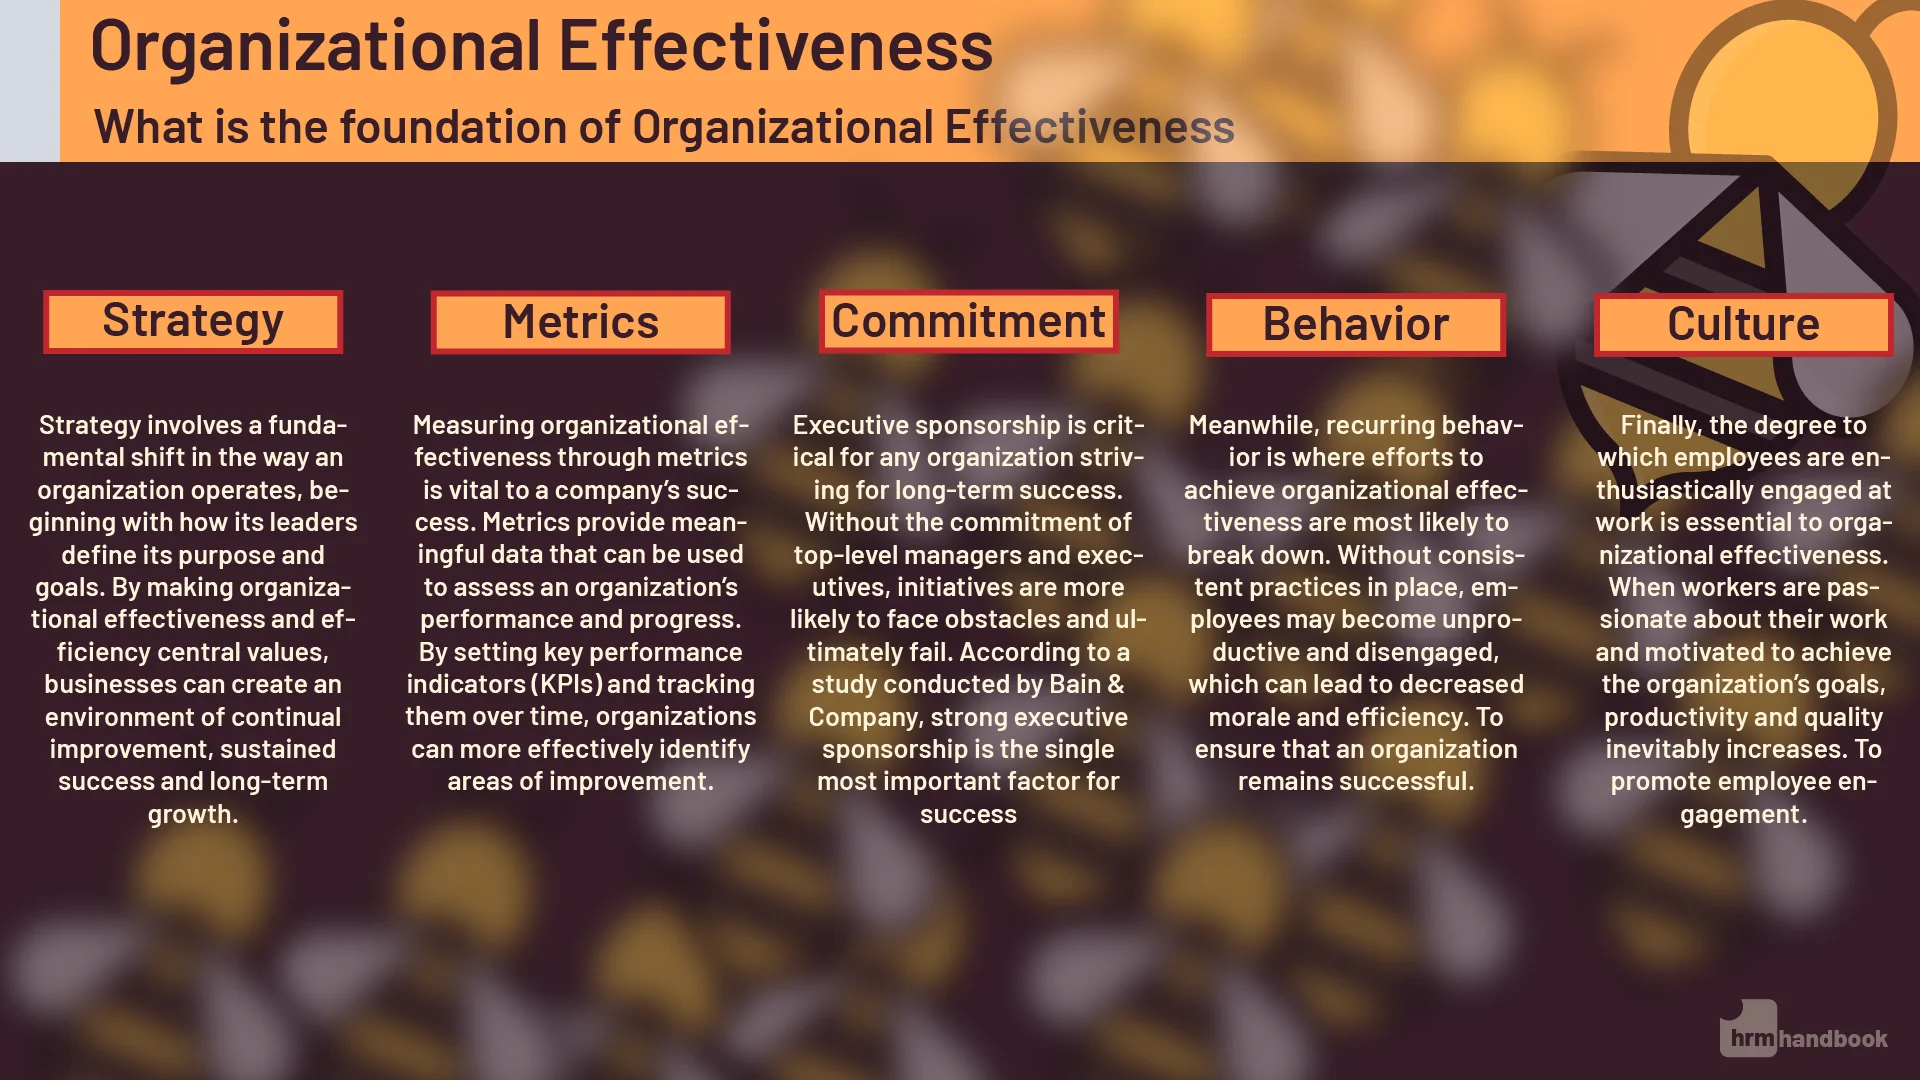 Key Foundations of Organizational Effectiveness